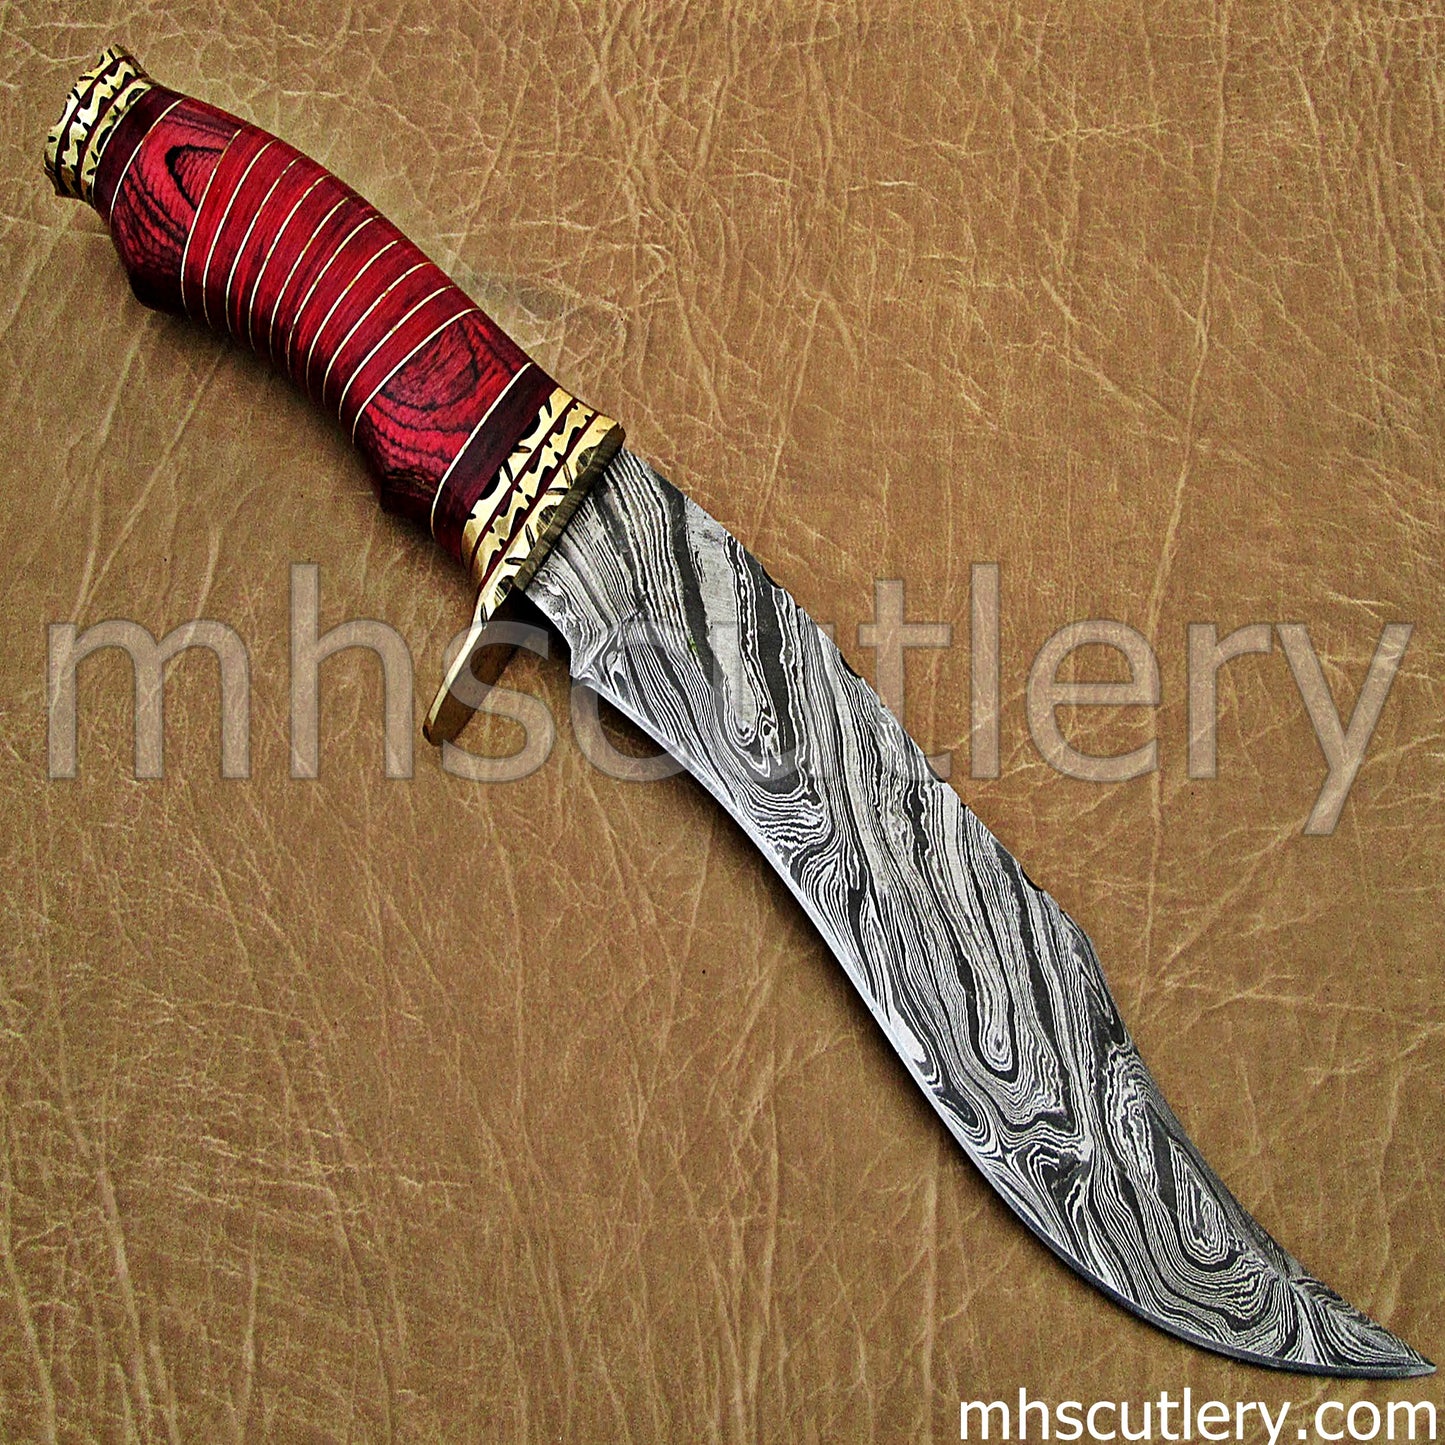 Handmade Damascus Steel Kukri Hunting Knife | mhscutlery